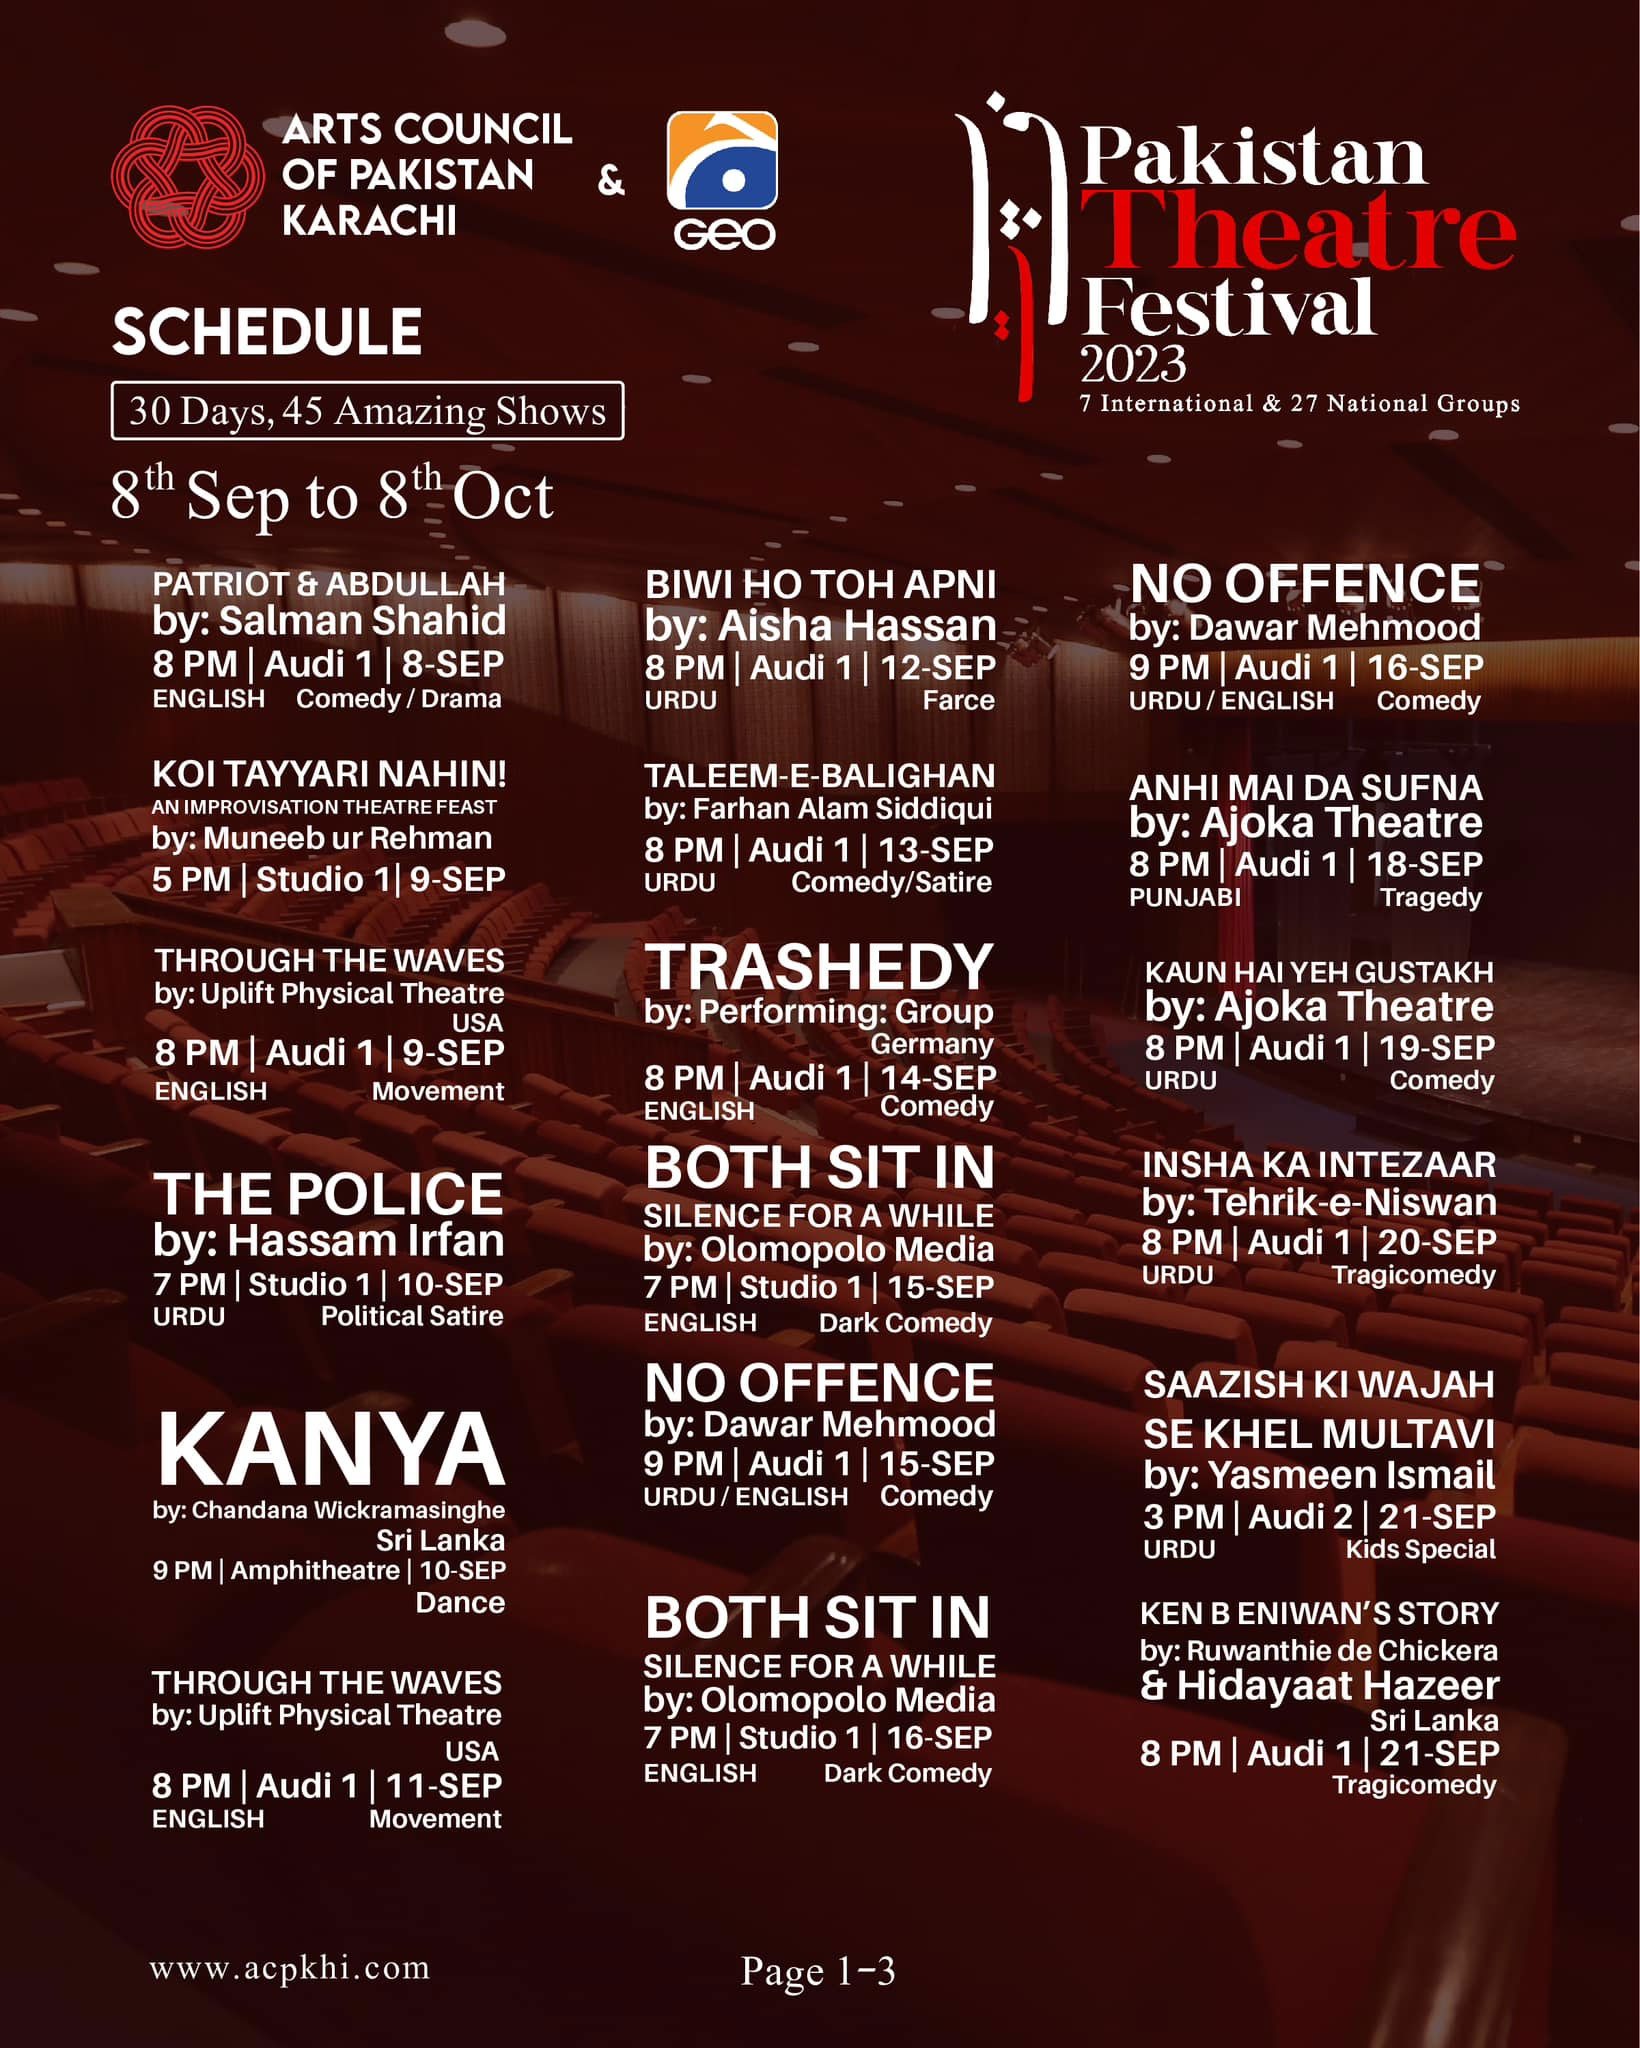 Pakistan Theatre Festival kicks off in Karachi